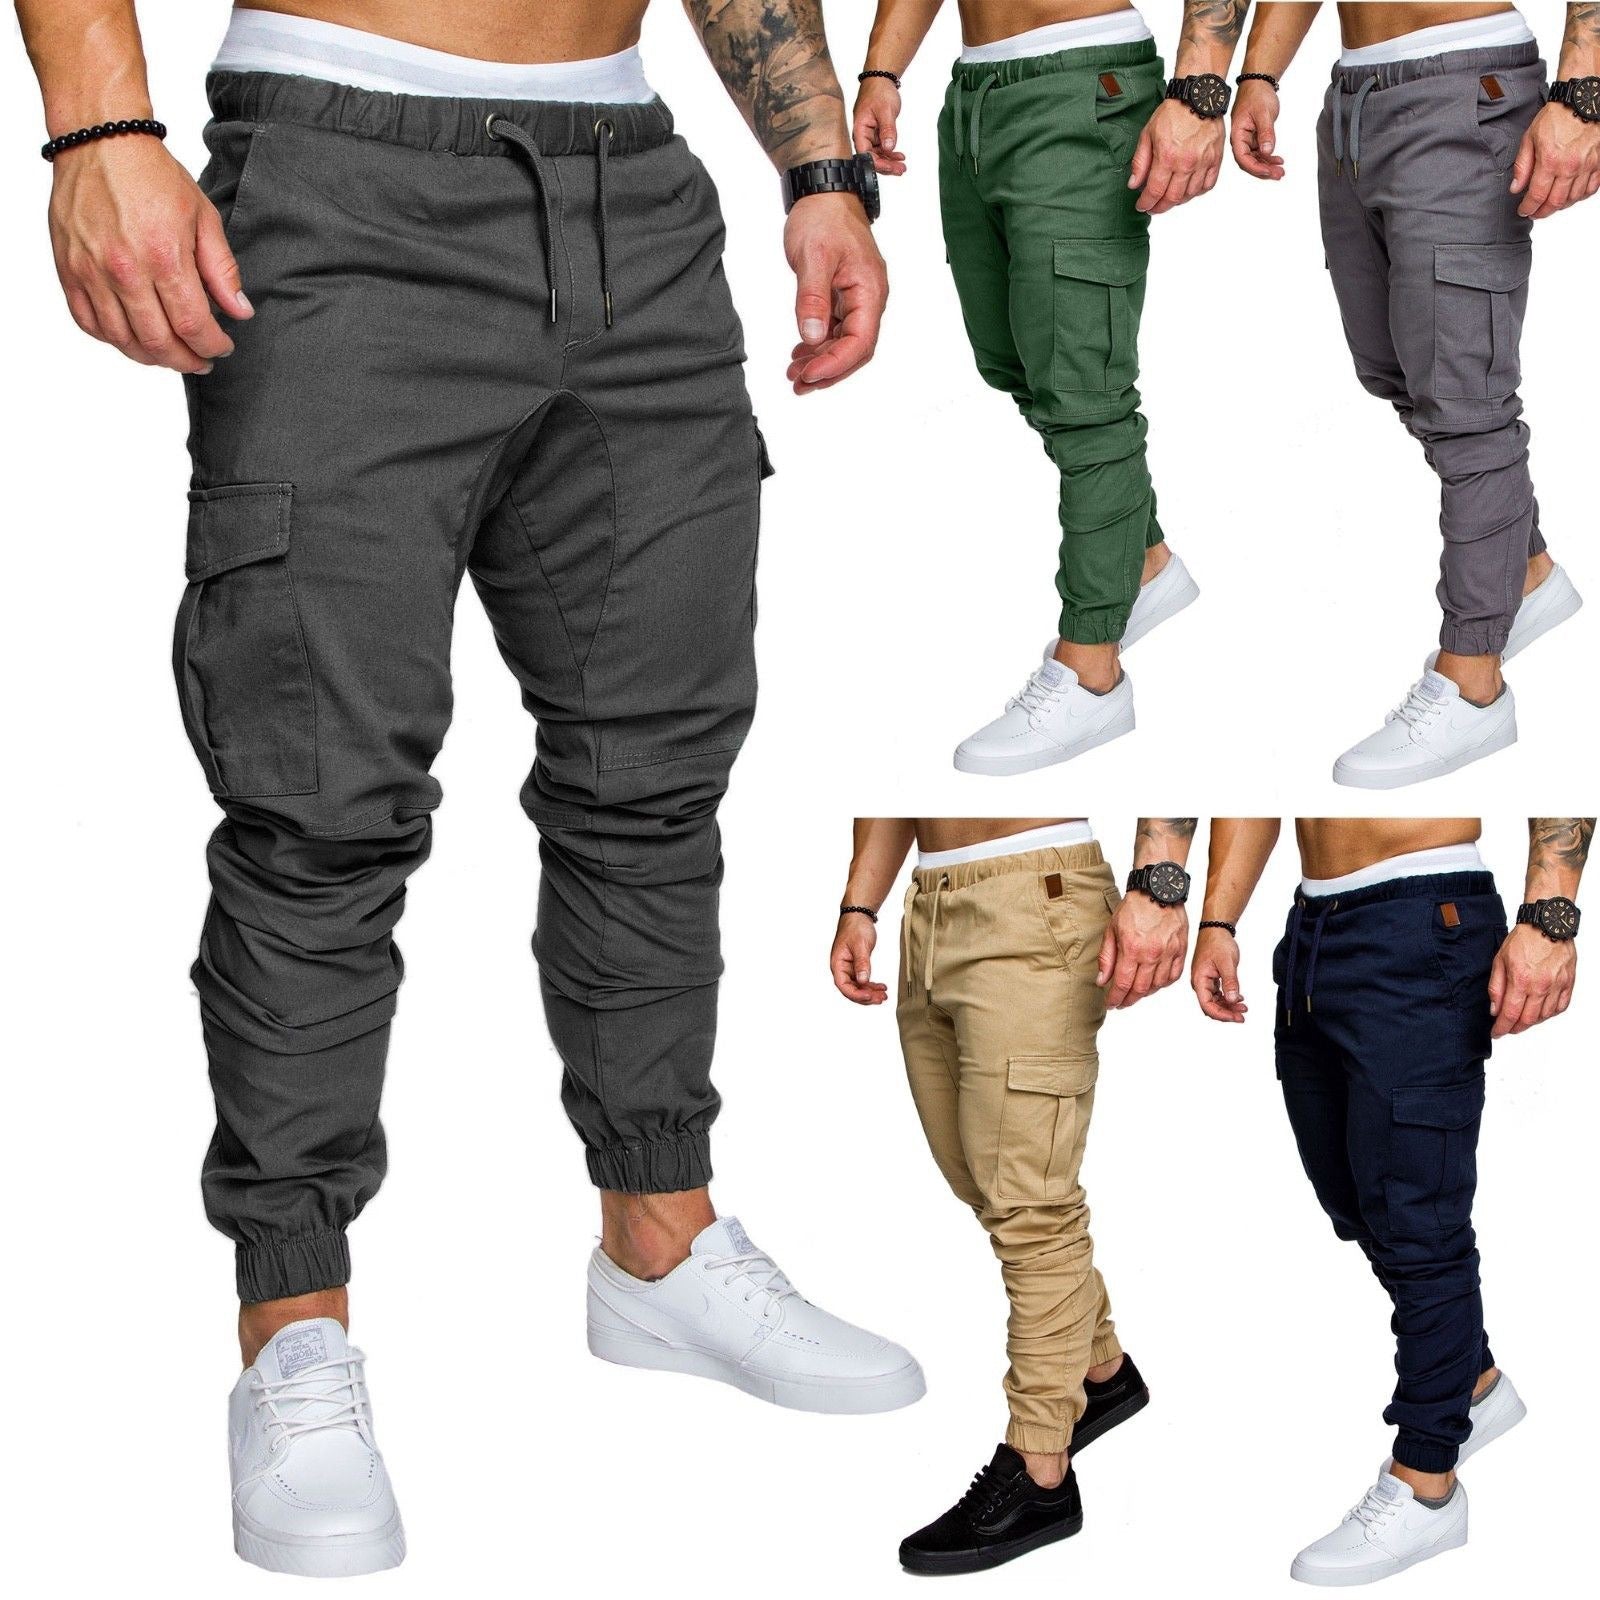 Multi pocket casula pants for men